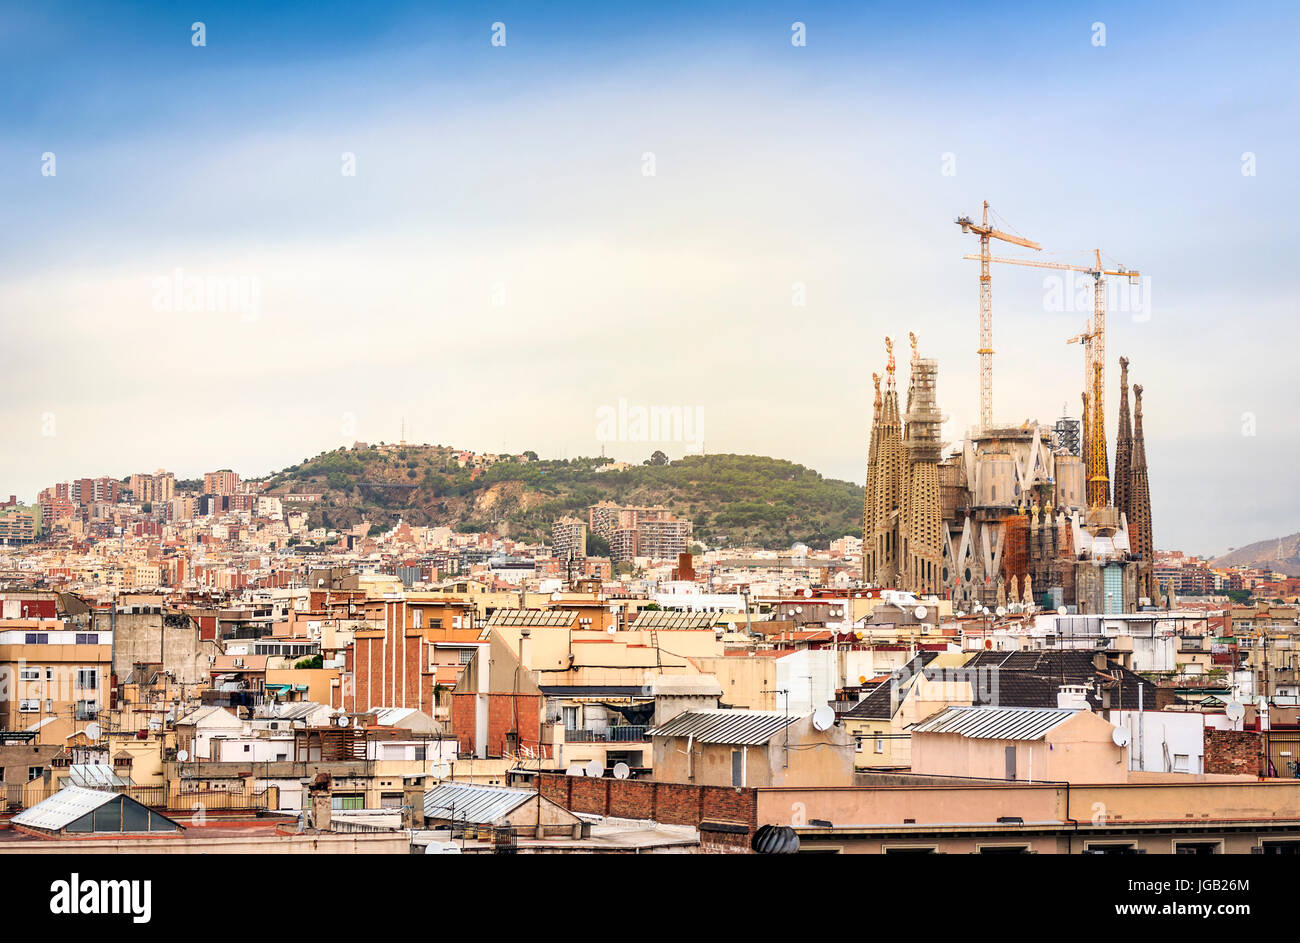 Sagrada Familia by Antonio Gaudi, Barcelona, Spain Stock Photo